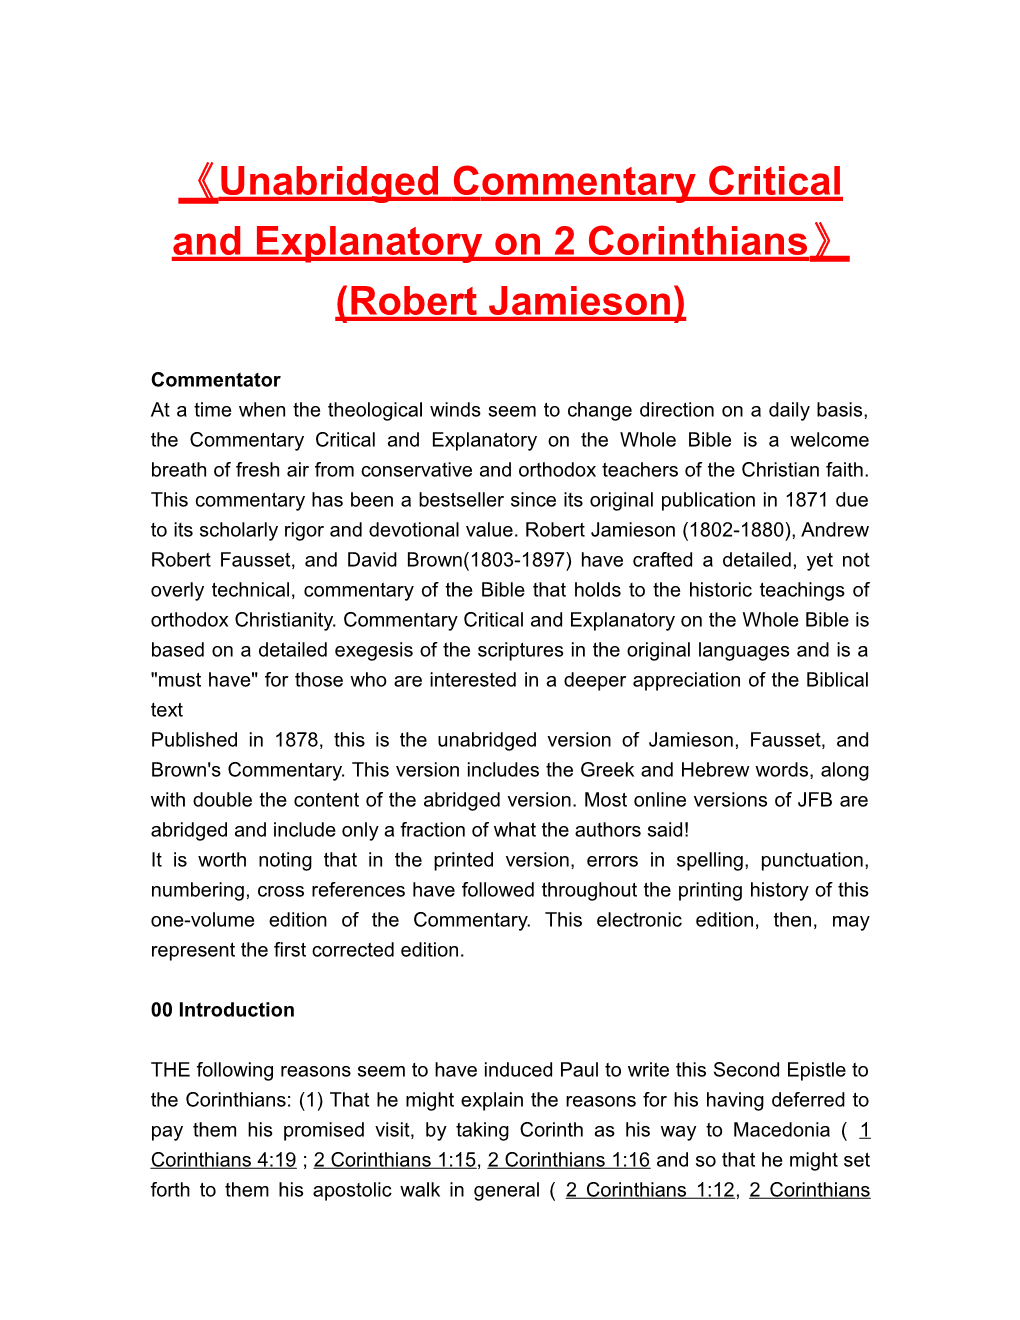 Unabridged Commentarycritical and Explanatory on 2 Corinthians (Robert Jamieson)